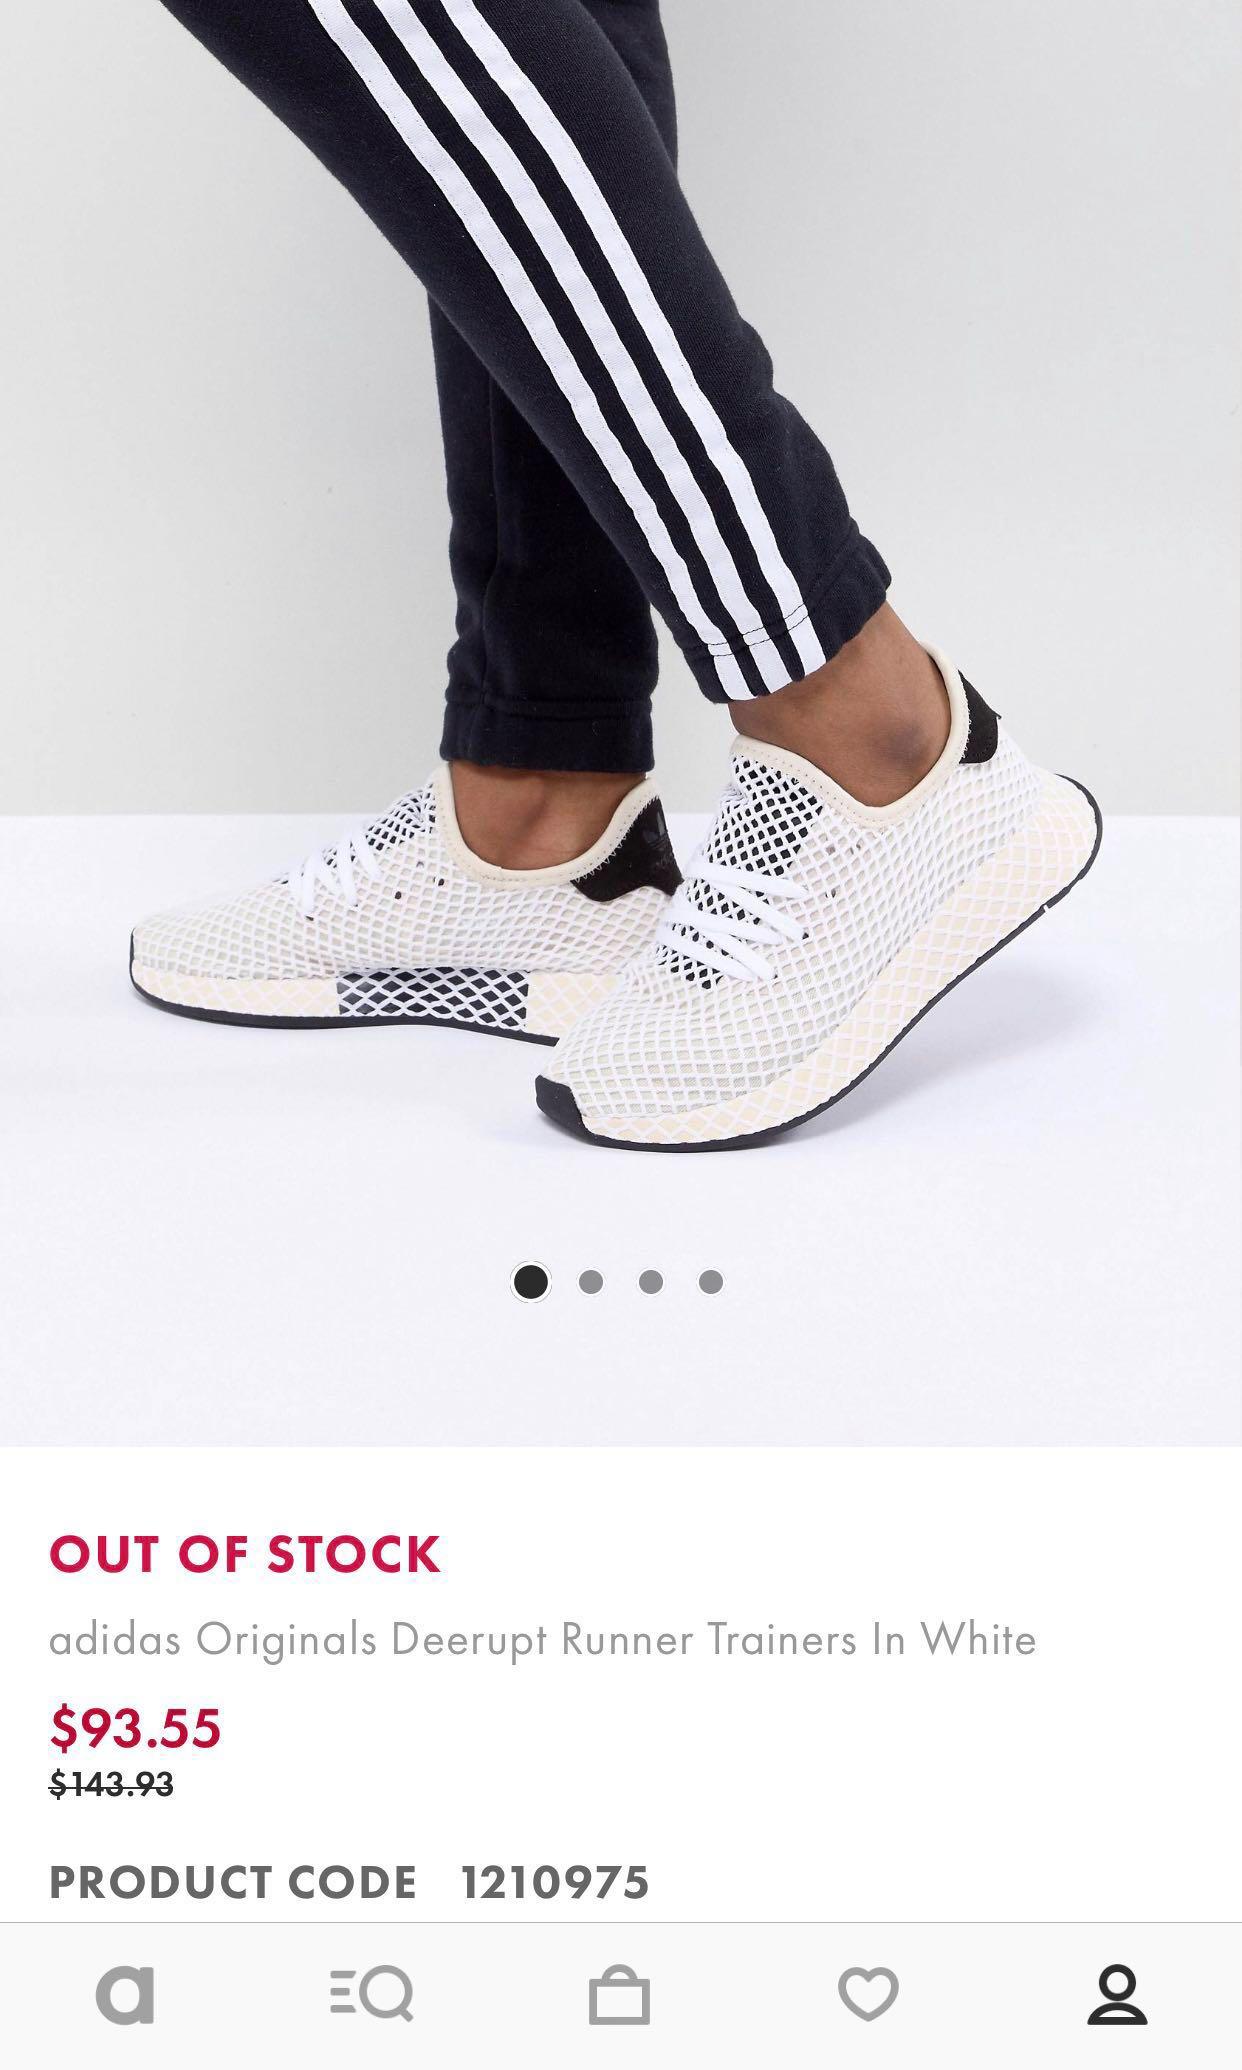 deerupt runner adidas